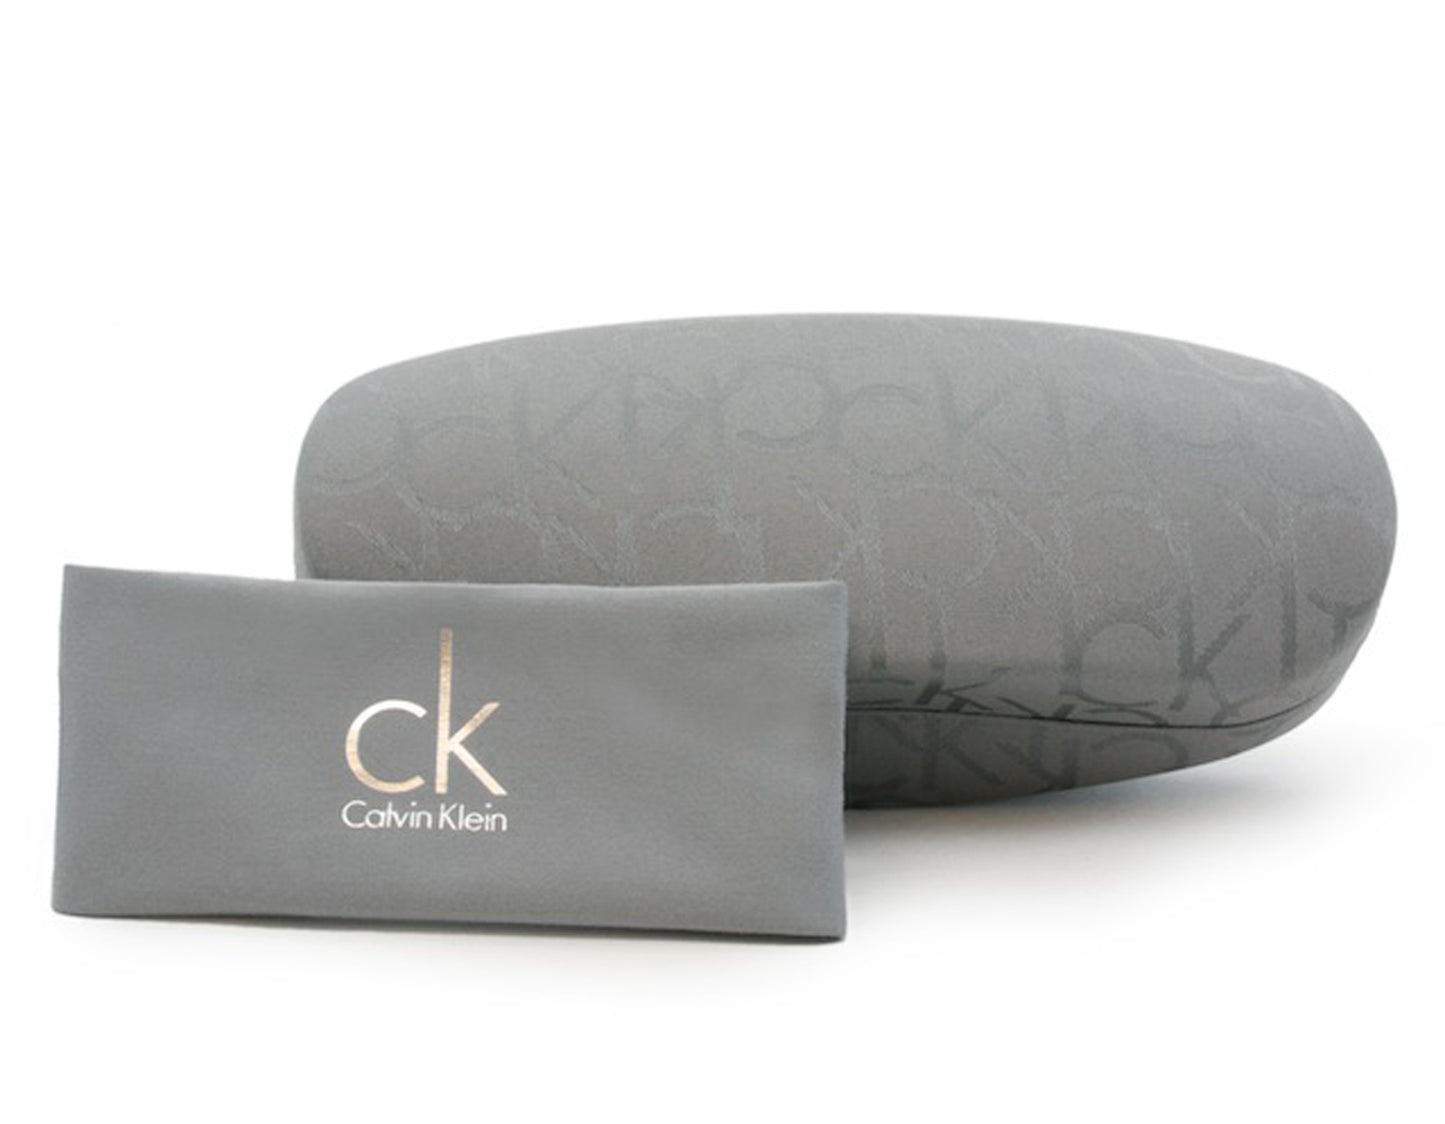 Calvin Klein CK20128-605-5418-COL 54mm New Eyeglasses